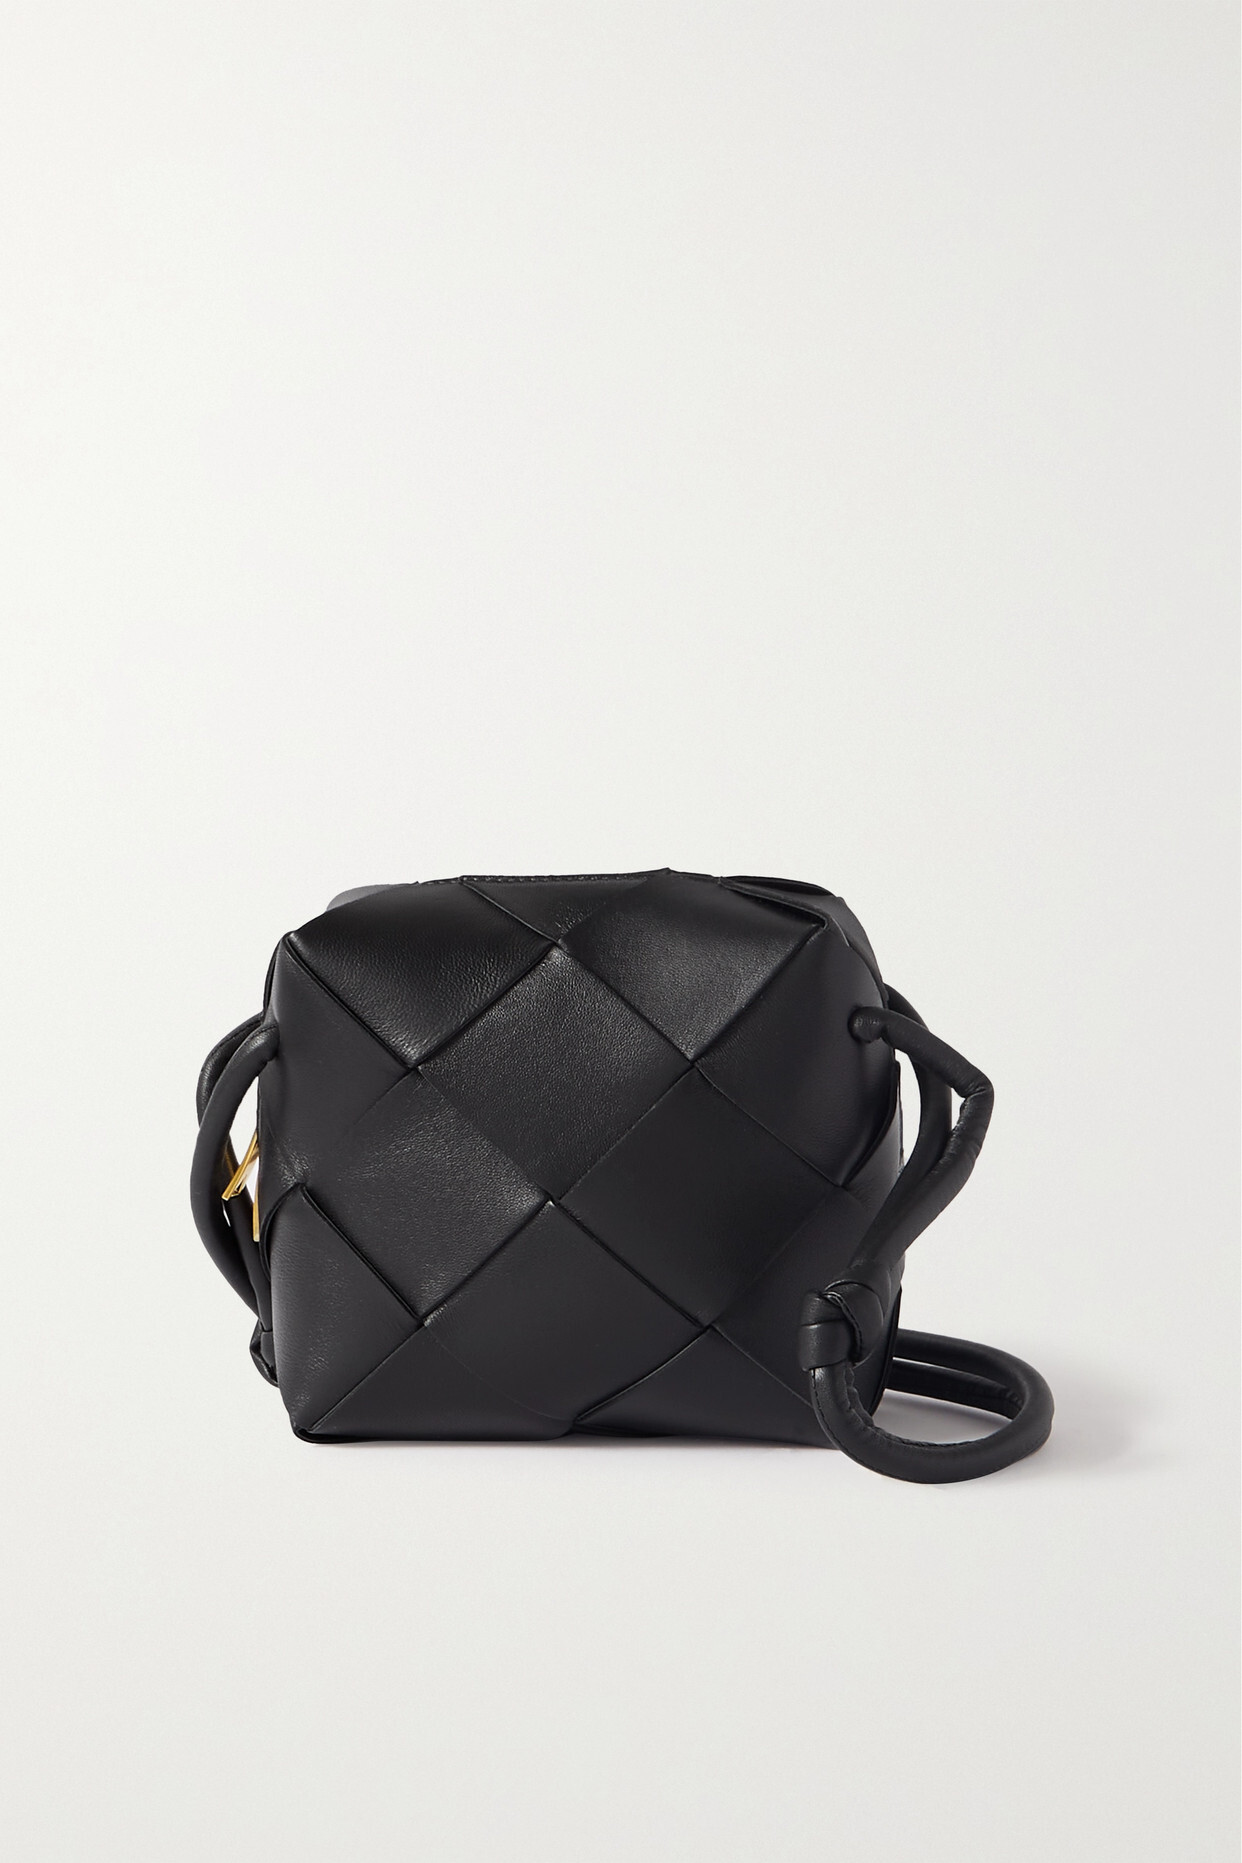 Bottega Veneta - Camera Mini Intrecciato Leather Shoulder Bag - Black